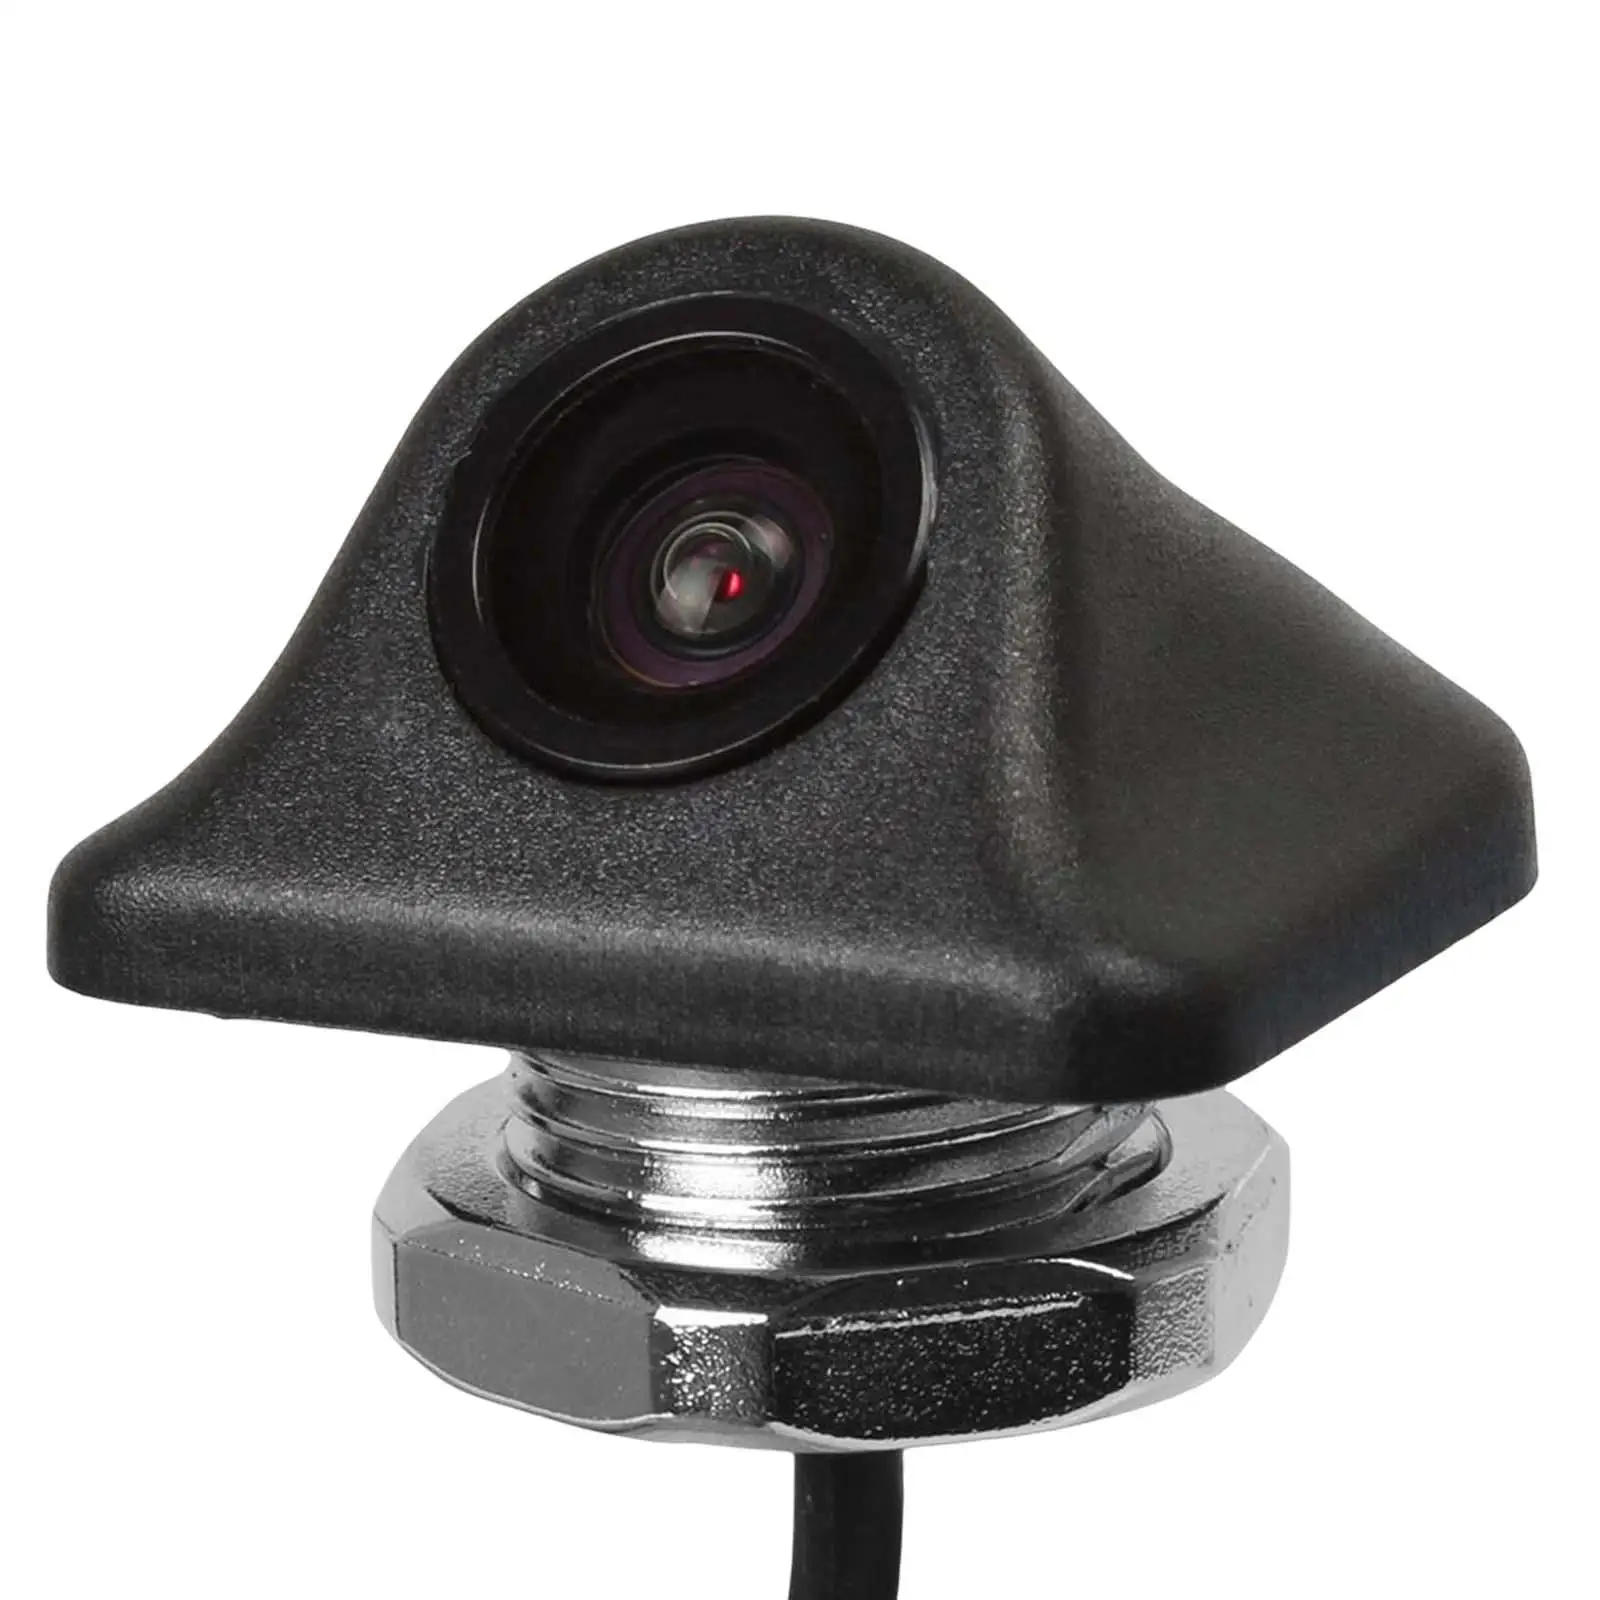 Car Rear View Camera Backup Camera High Sensitivity for Car